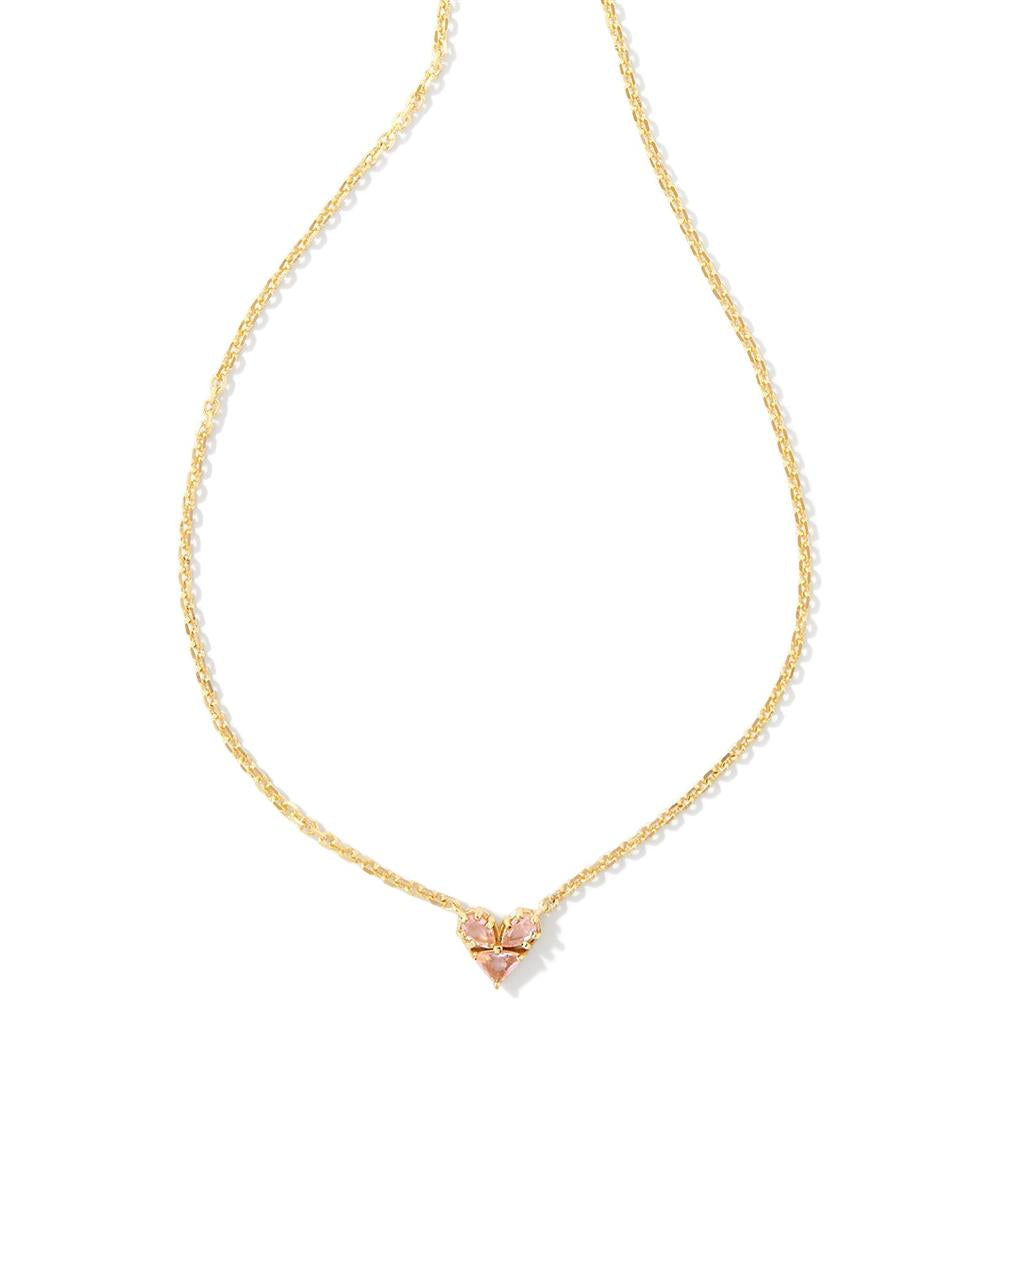 Kendra Scott Stella 14k Gold Pendant Necklace in Diamond | The Summit